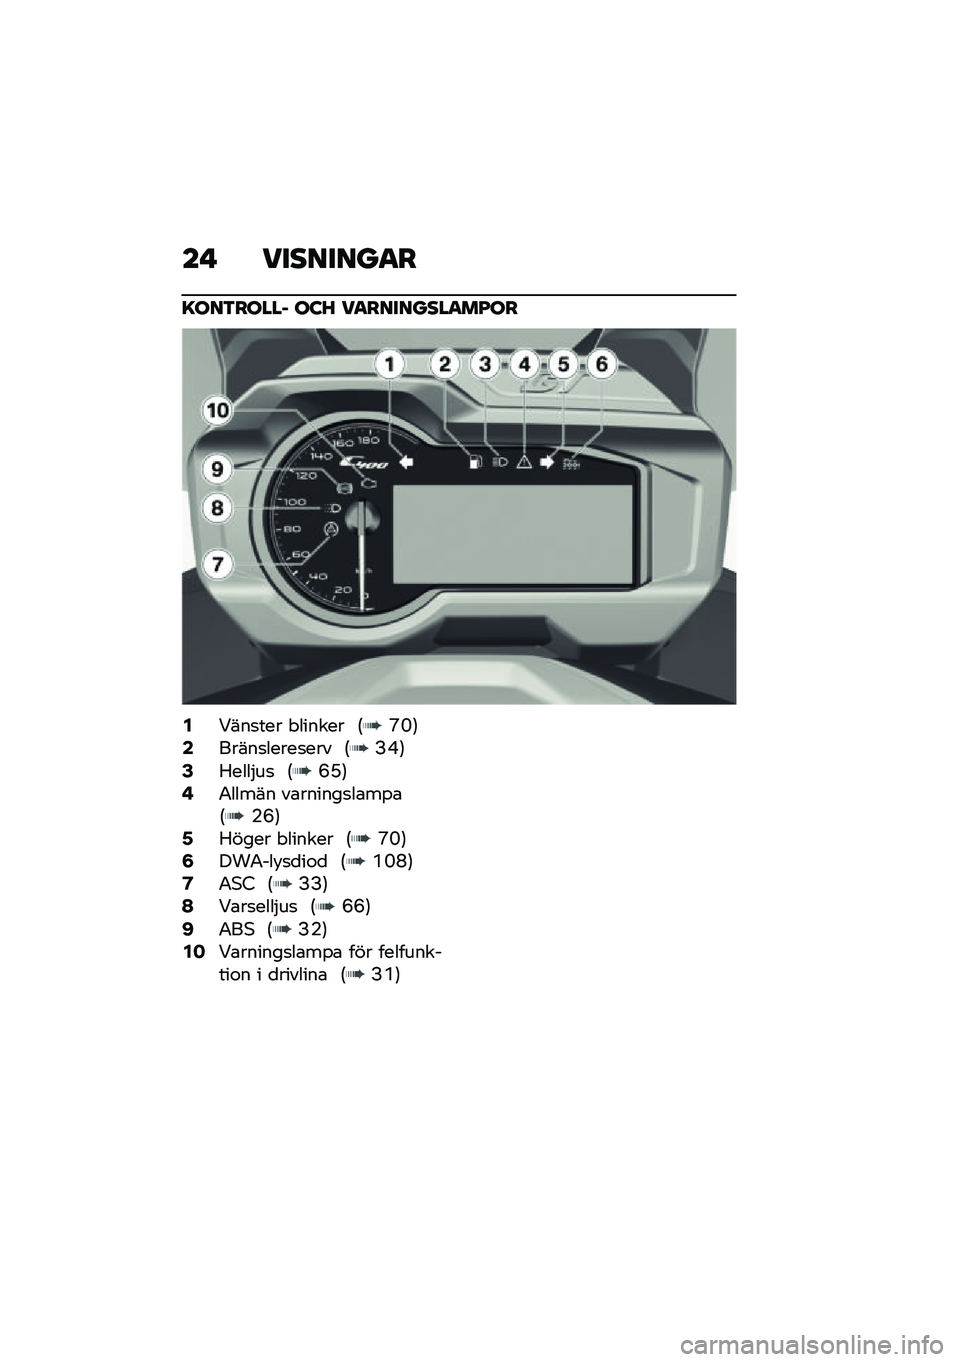 BMW MOTORRAD C 400 GT 2021  Instruktionsbok (in Swedish) ��  ��������
�
�=���3�����, ��:�A ��
��������
��I��
�2�9���
��� � ������ �:�P�N�;�4�����
�����
��� �:�B�-�;�6�5����$��
 �:�F�H�;�8�4����� ��\